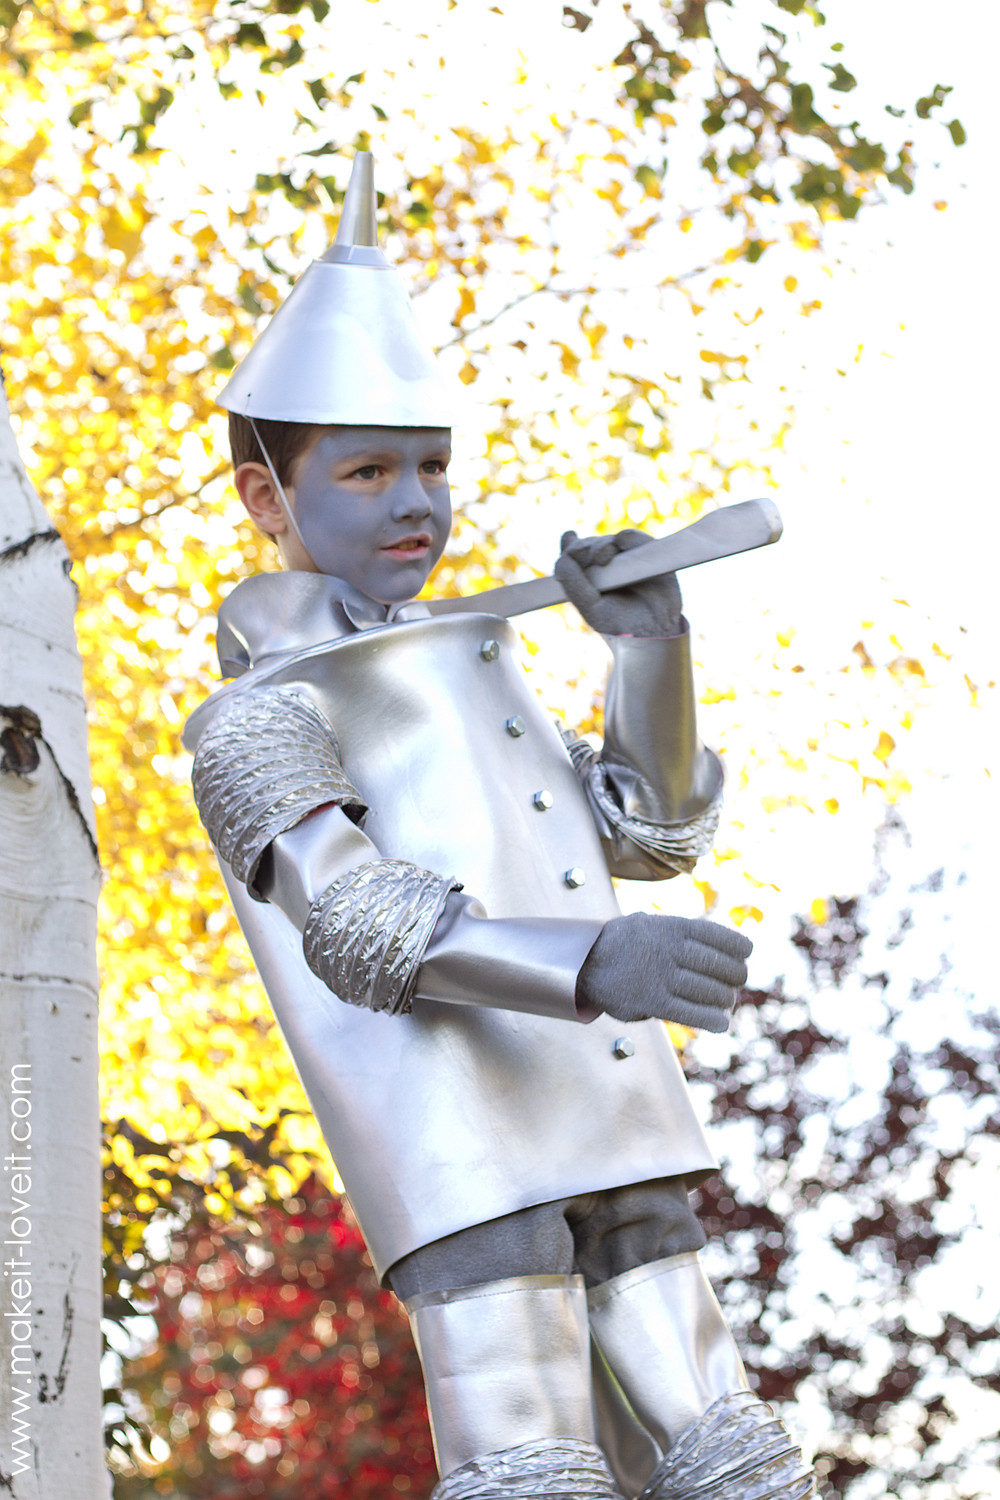 DIY Wizard Of Oz Costume
 The TIN MAN "Wizard of Oz"